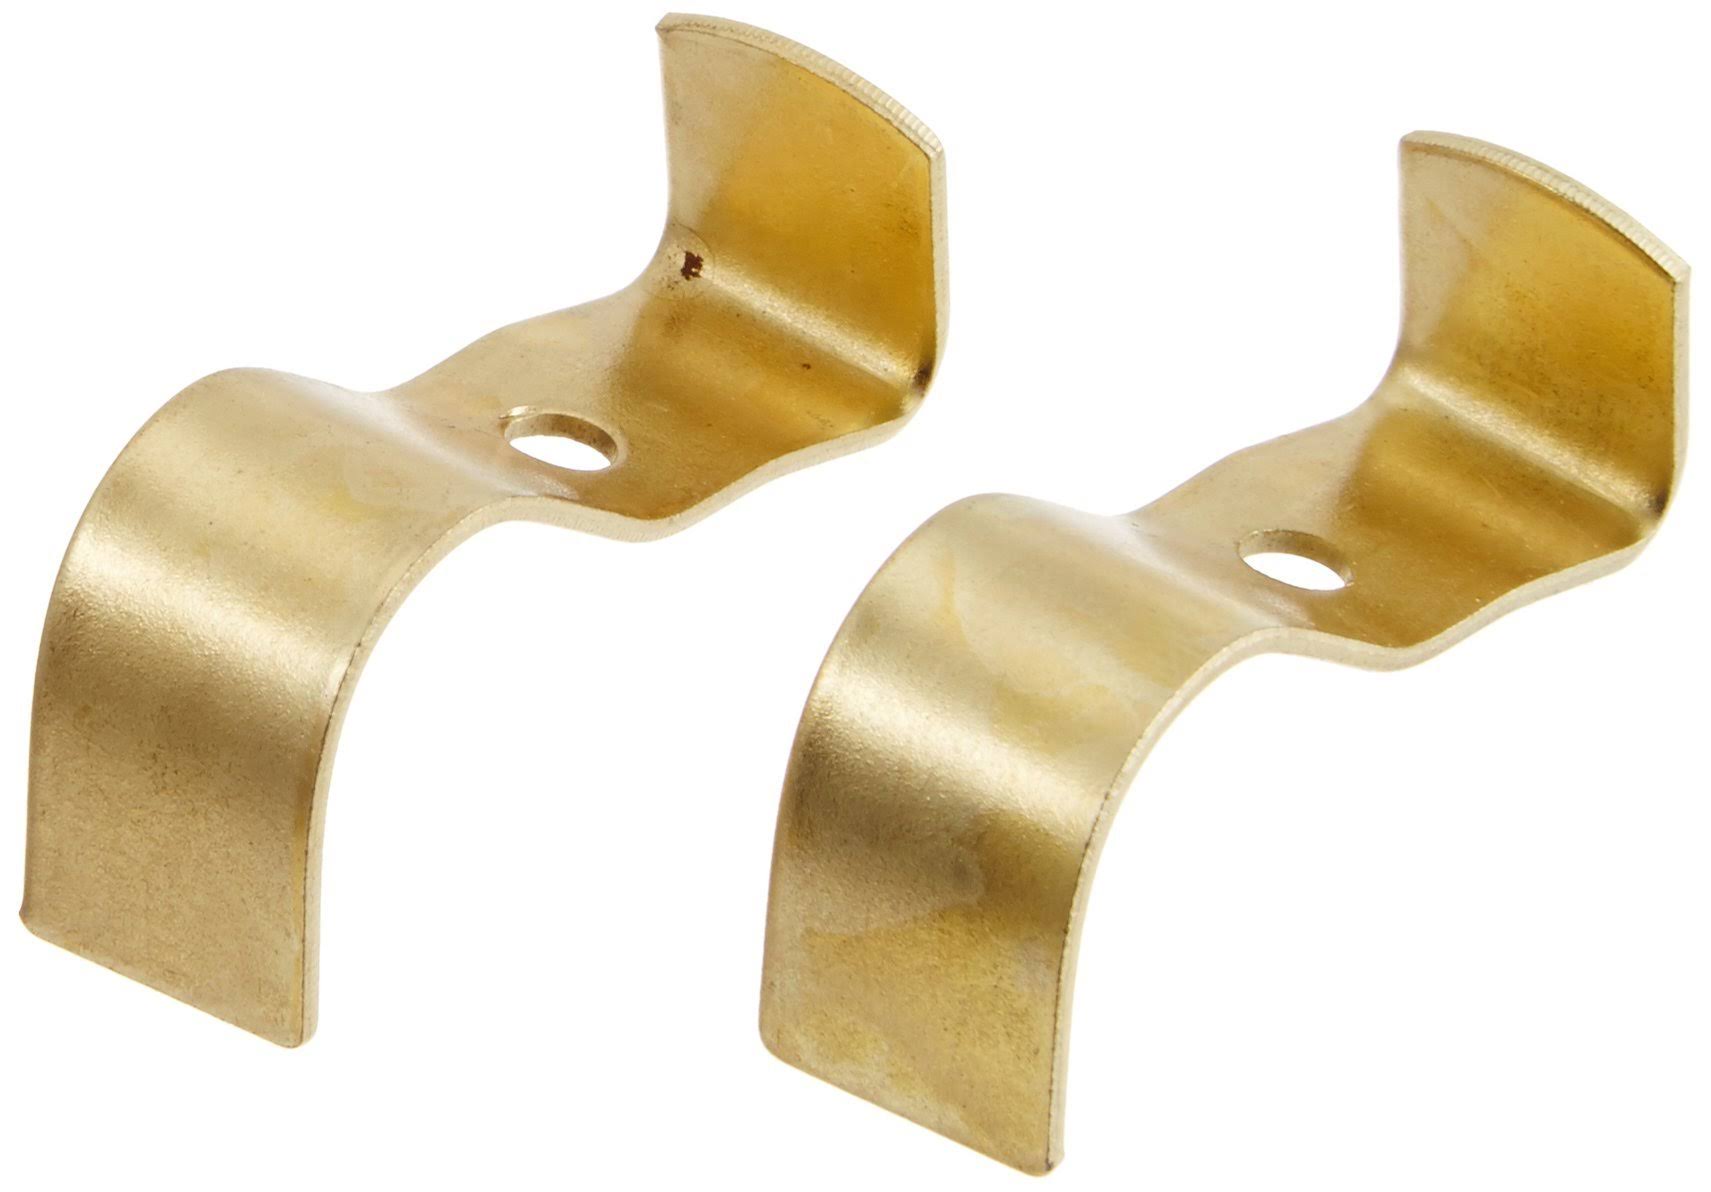 OOK Brass Plated Steel Narrow Molding Hooks - 2 Pack